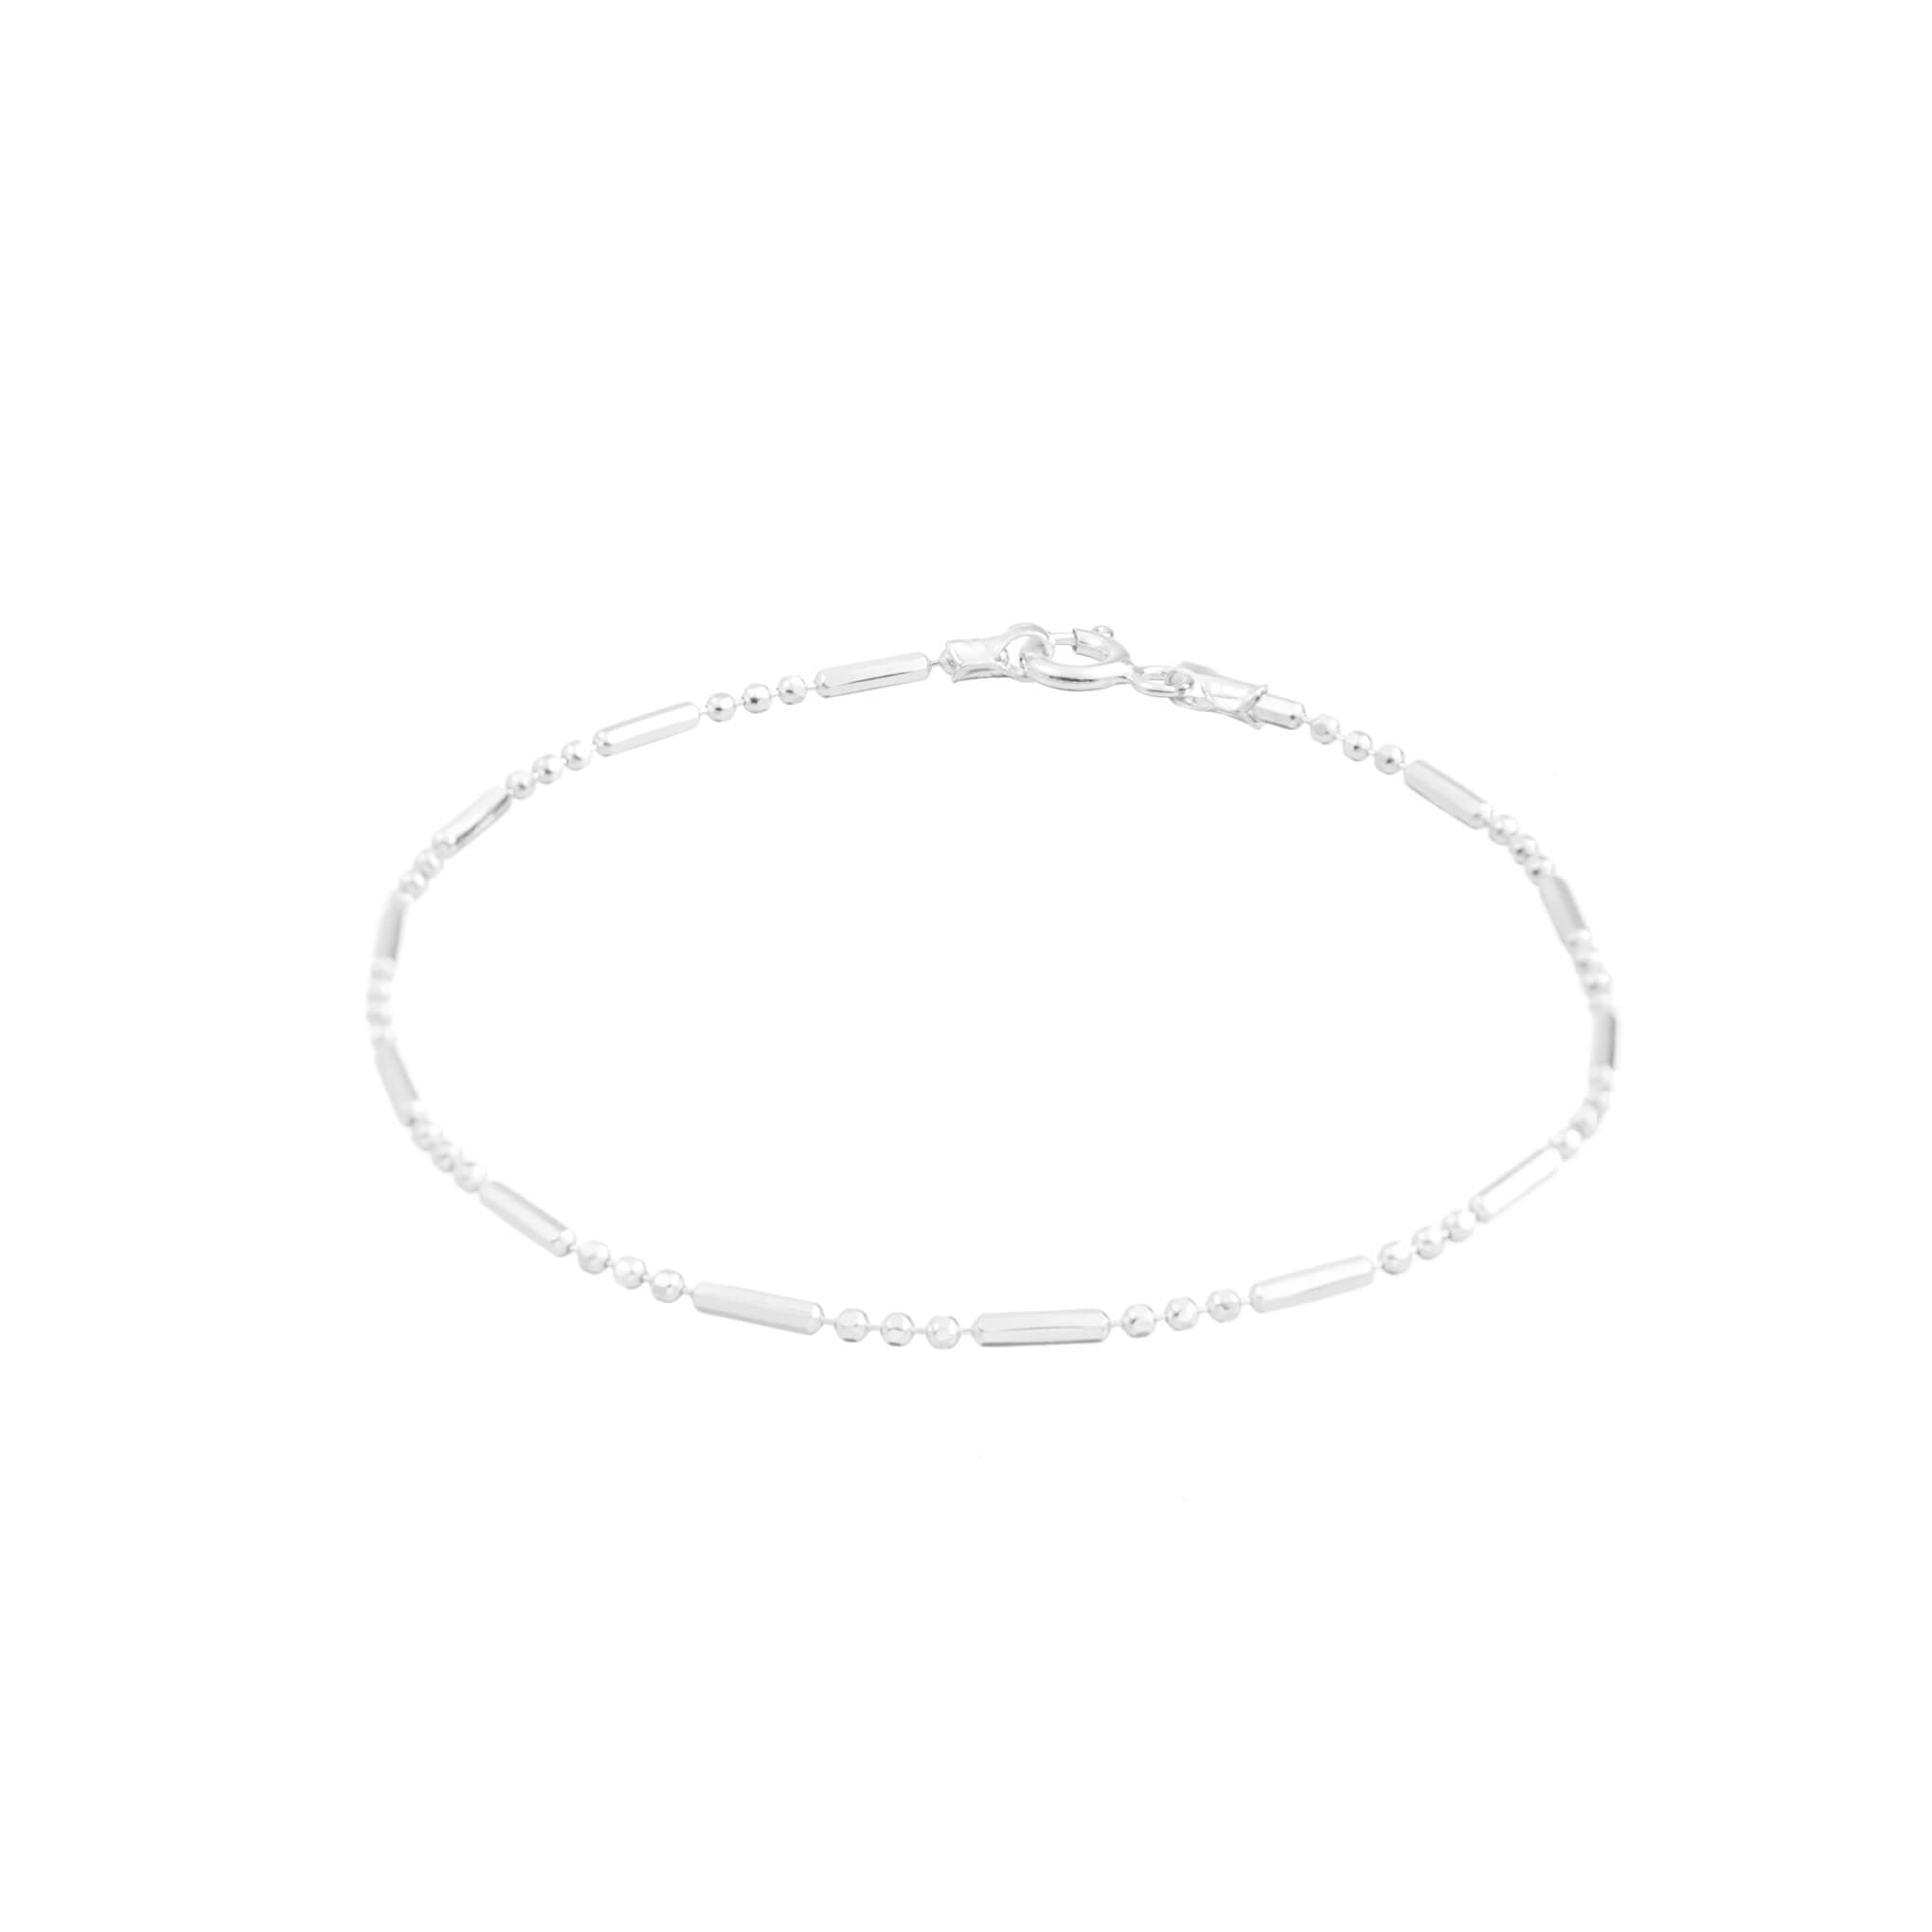 Bracelet silver dotted line